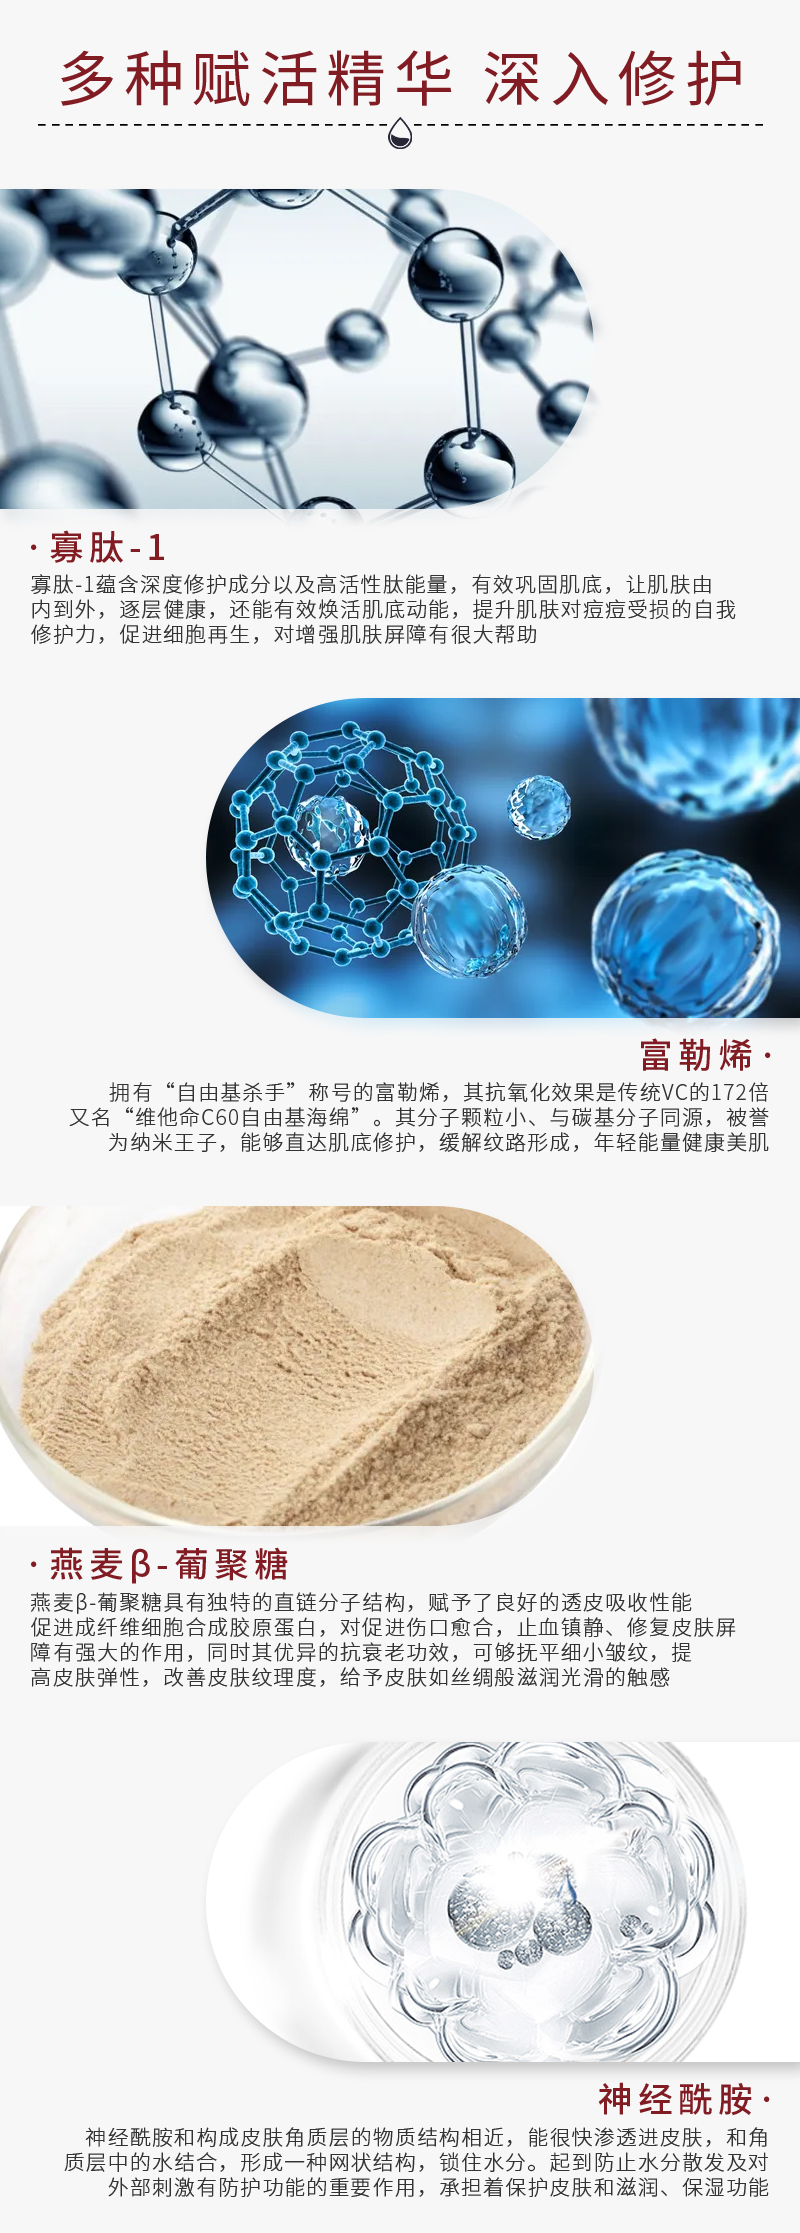 Therapeel Xiu Muning ผงแห้งแช่แข็ง: -5